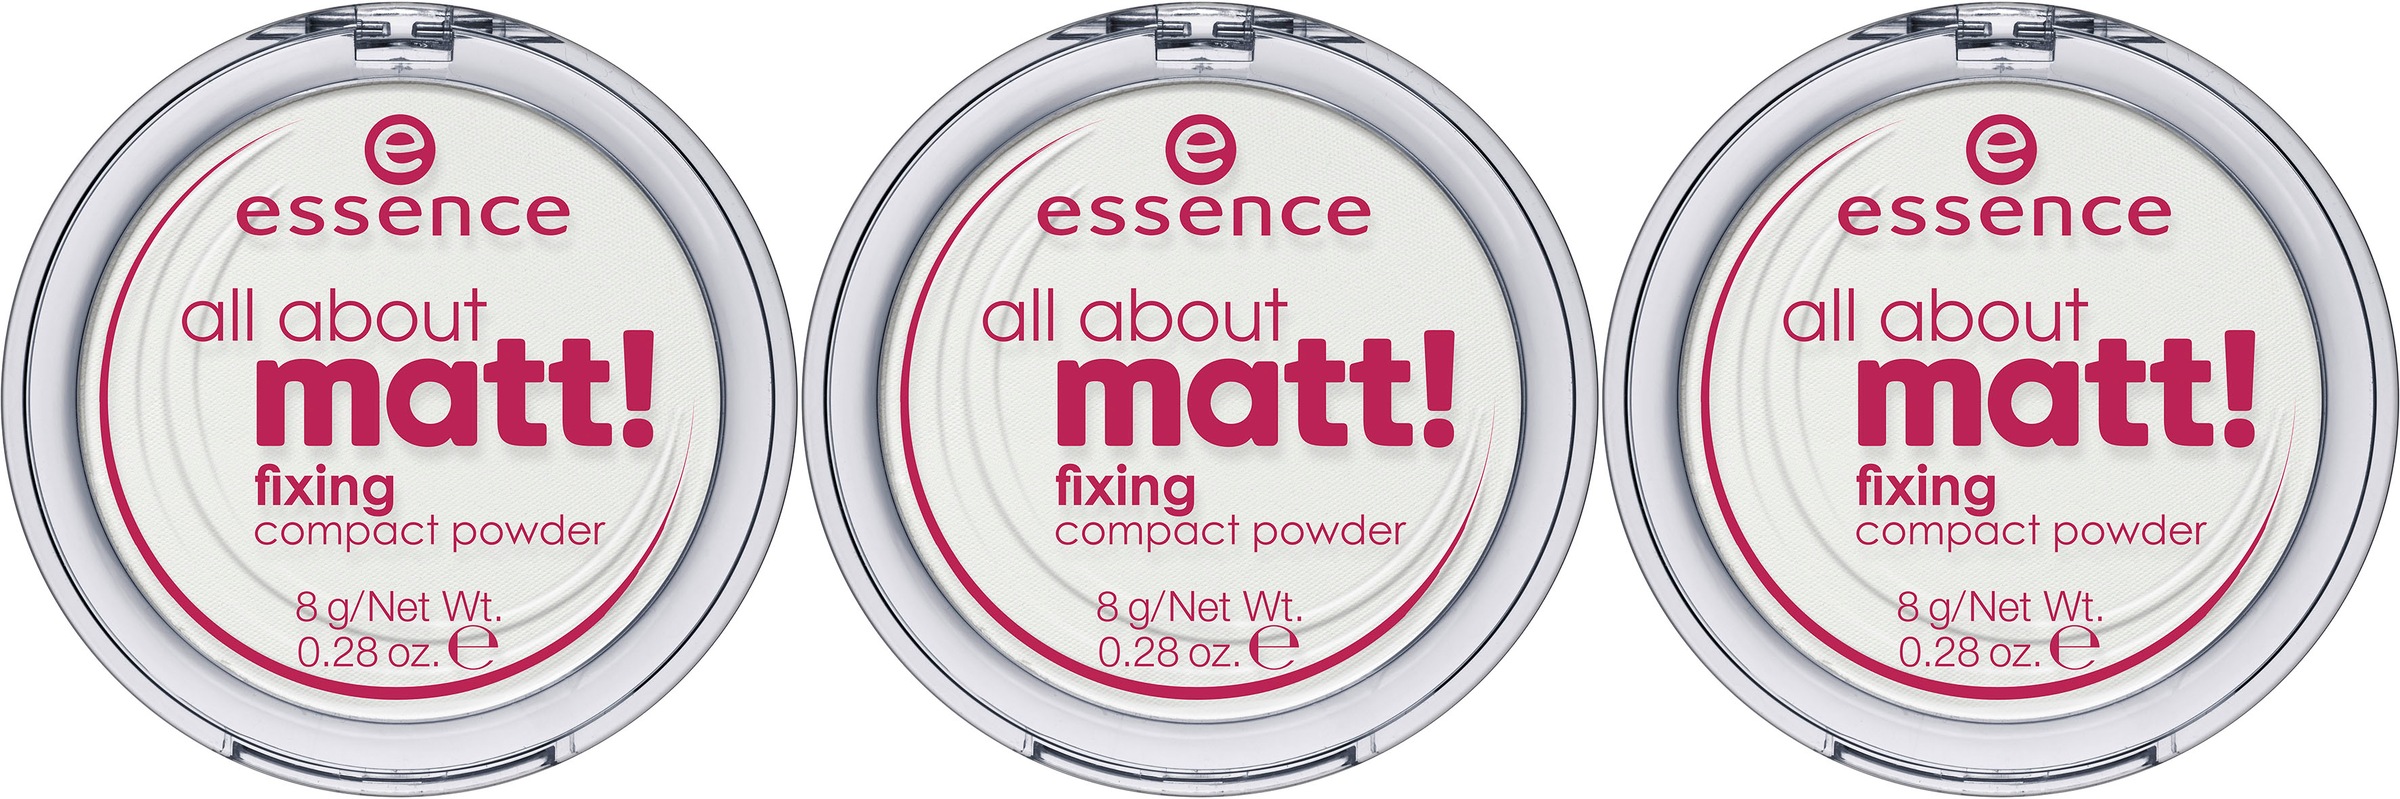 Essence Puder »all tlg.) fixing ♕ bei about compact powder«, 3 matt! (Set